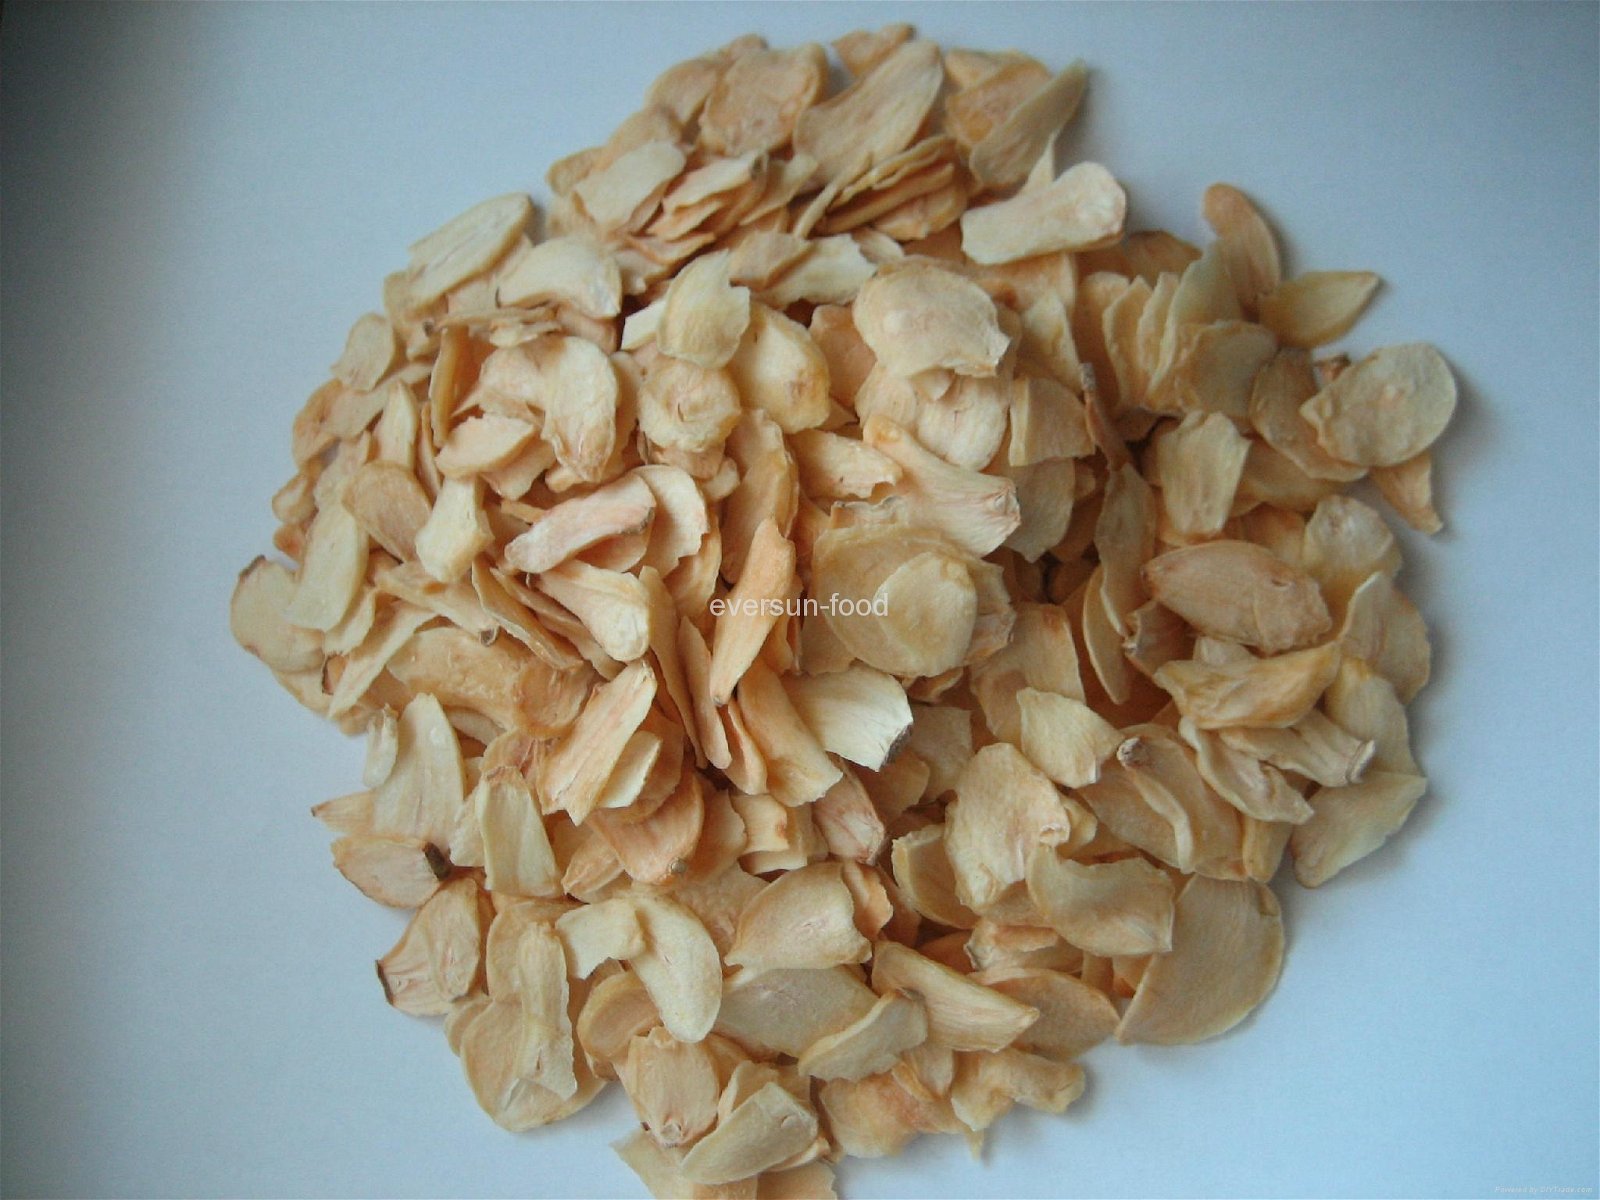 Dehydrated garlic flakes 3